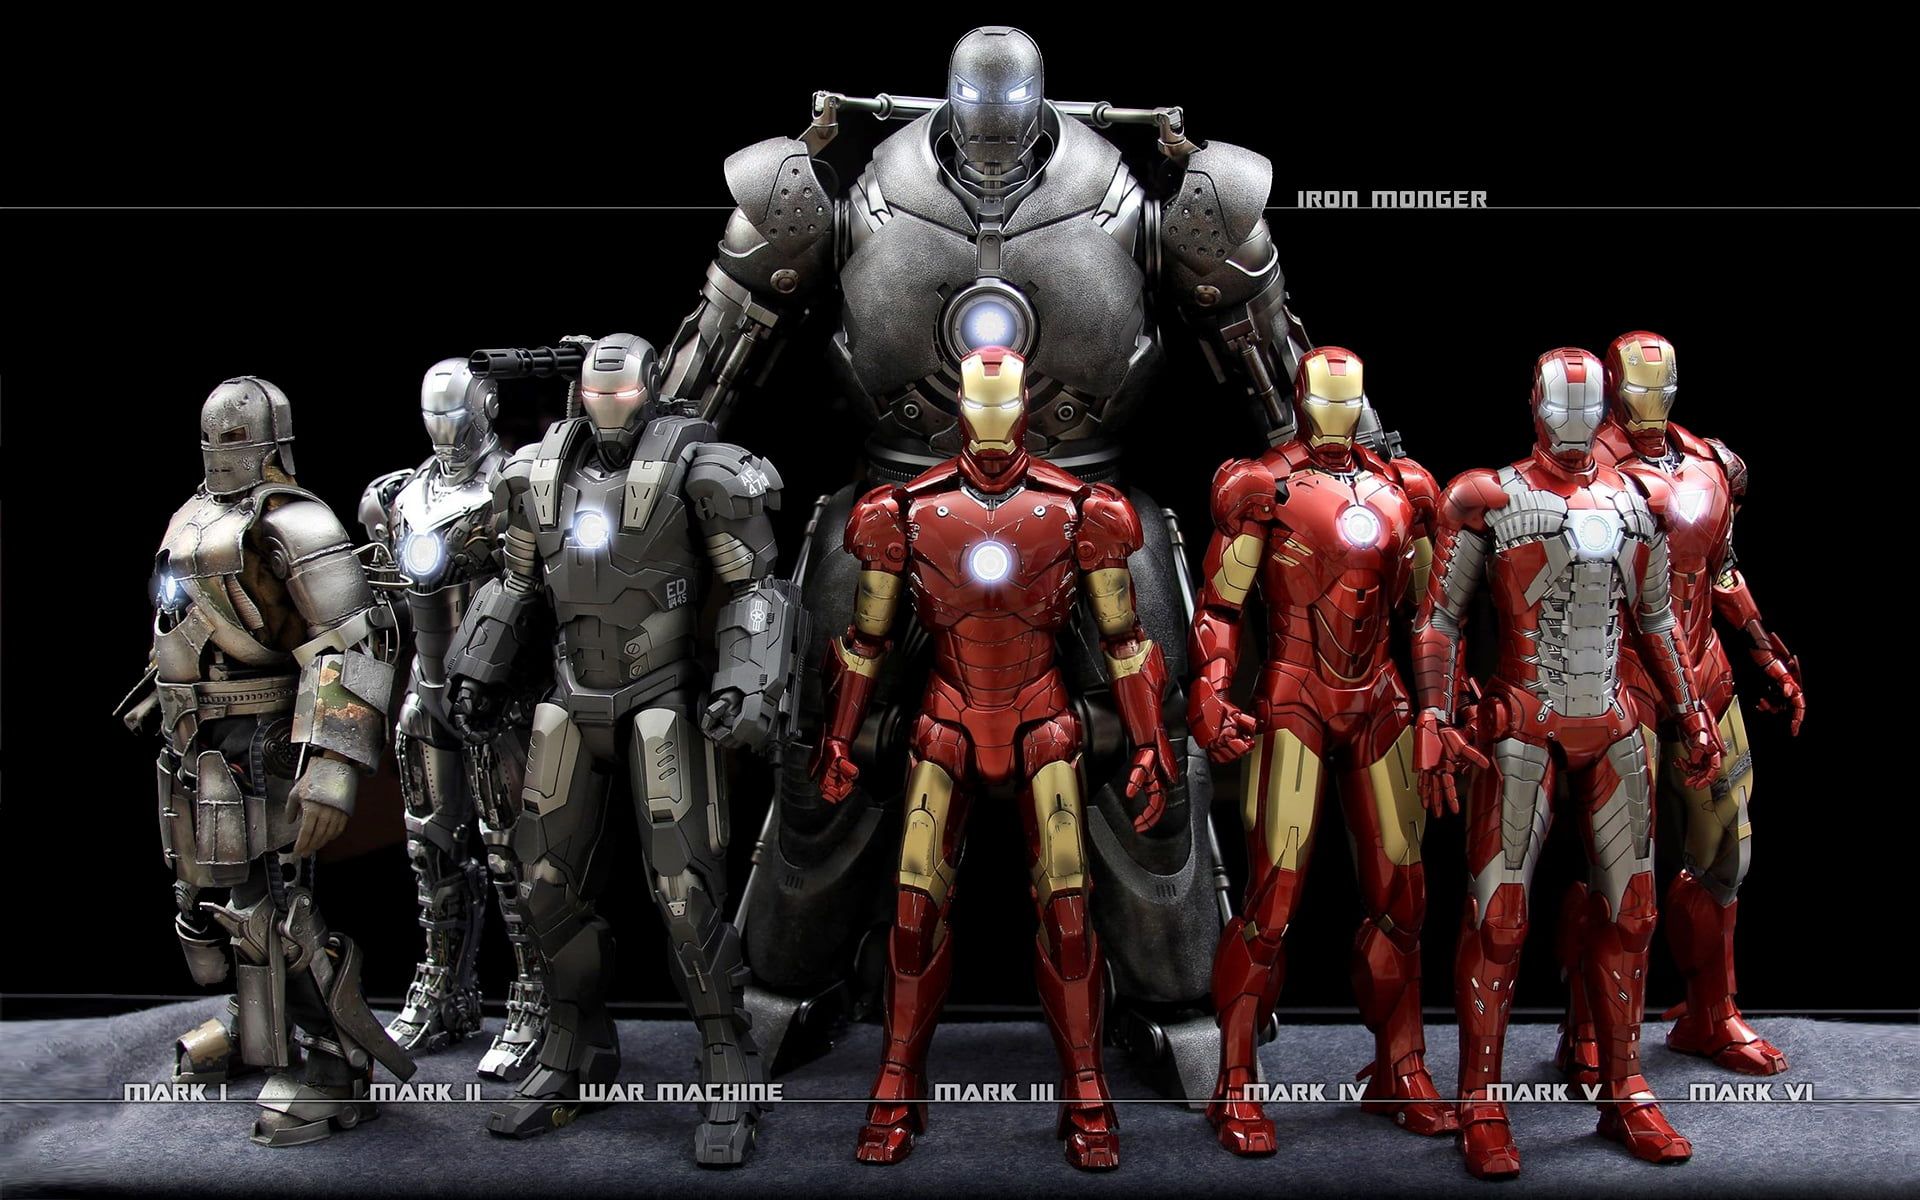 Iron Man digital wallpaper, Marvel Iron Man suits wallpaper #movies The Avengers Iron Man #robot digital a. Iron man wallpaper, All iron man suits, Iron man movie